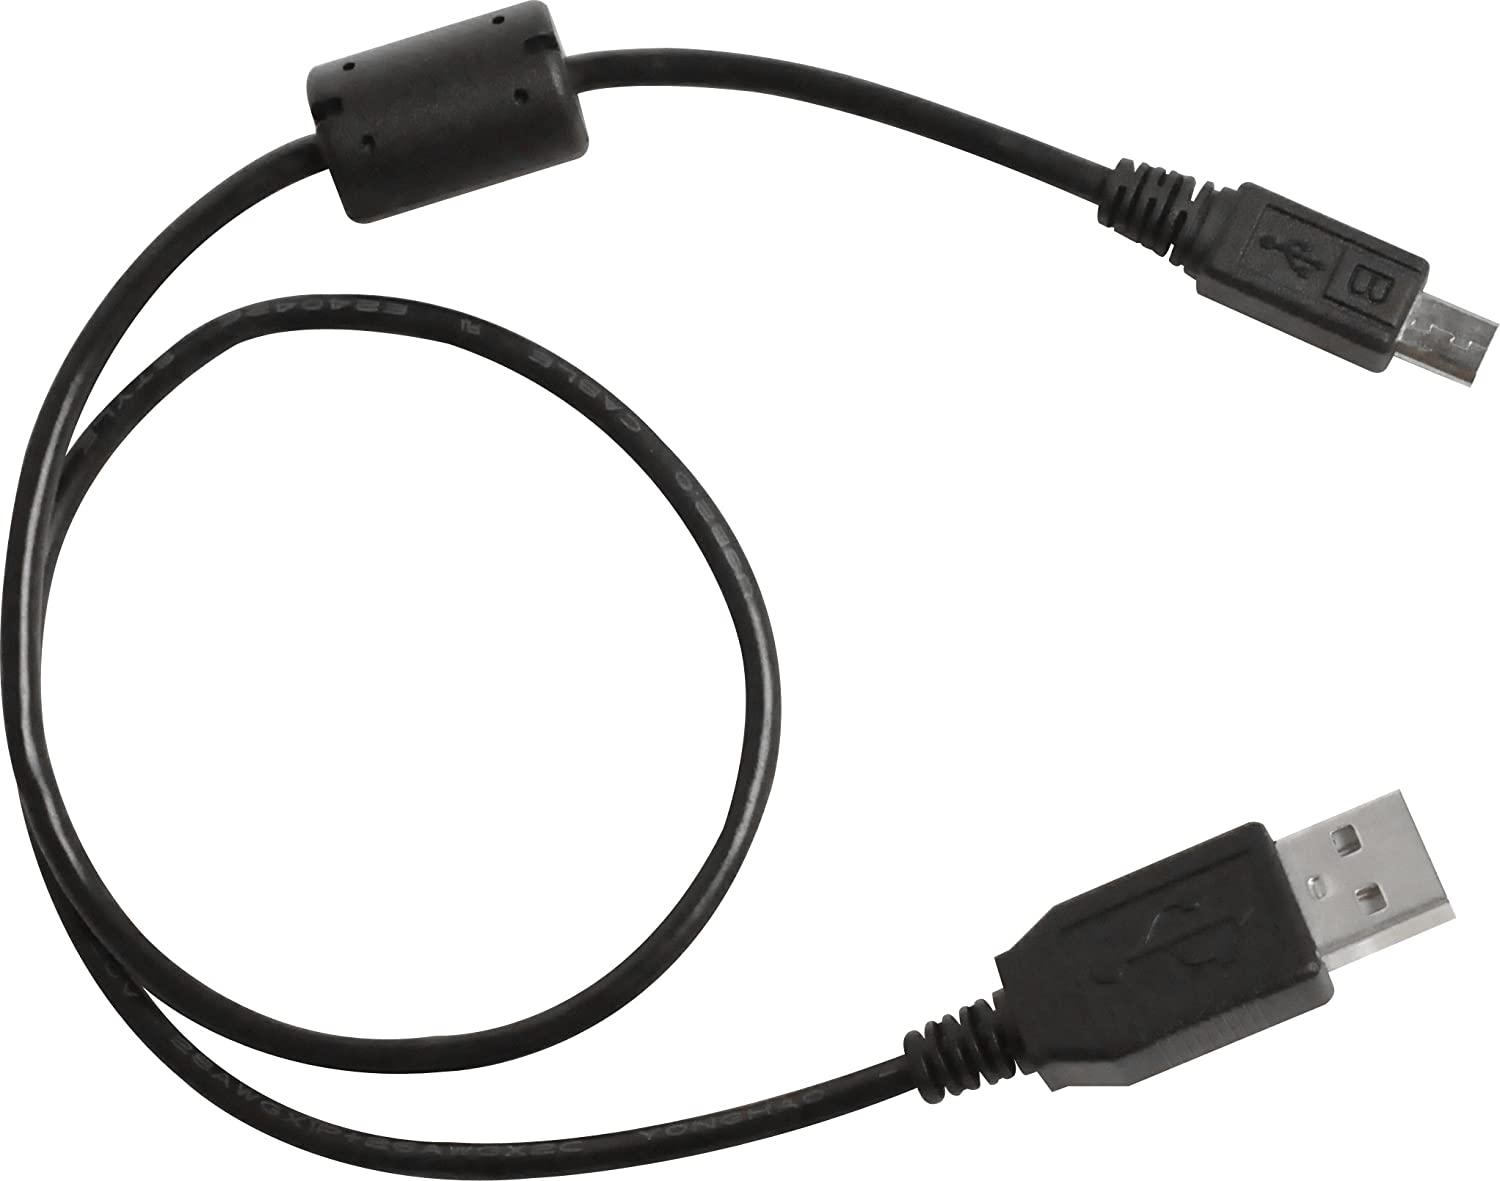 USB Cable for Sena 10C Pro Bluetooth Communication System